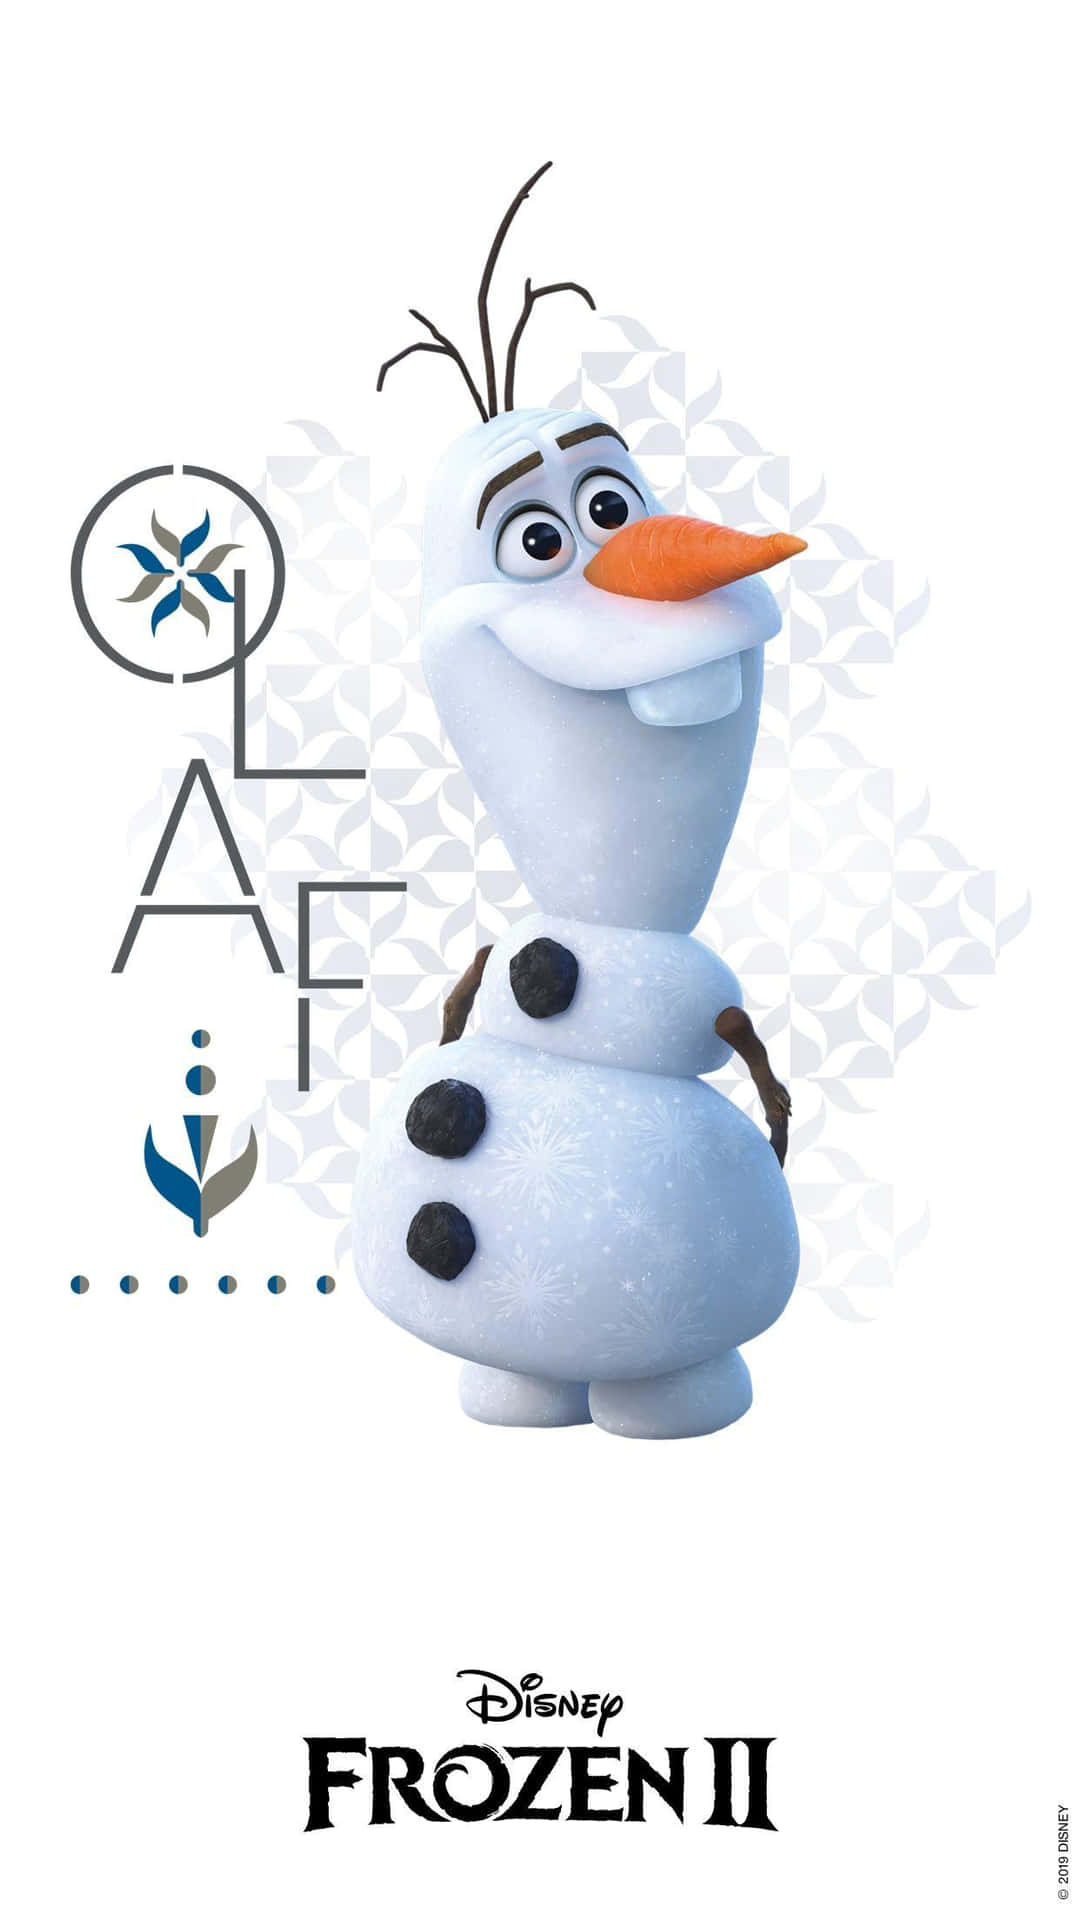 En sød Olaf med hans karakteristiske smil! Wallpaper